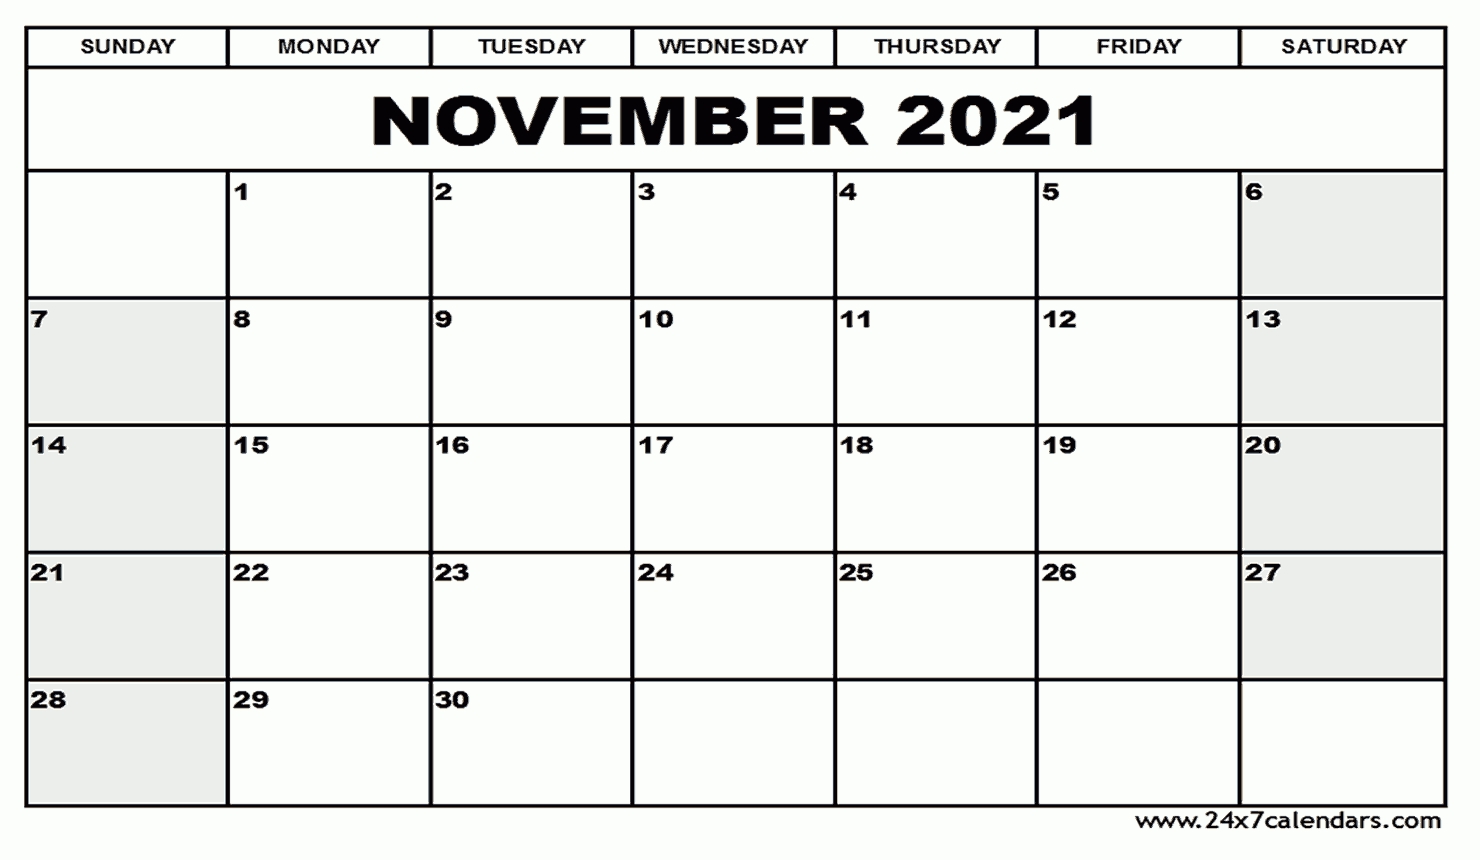 Free Printable November 2021 Calendar : 24X7Calendars November 2021 Calendar Pdf